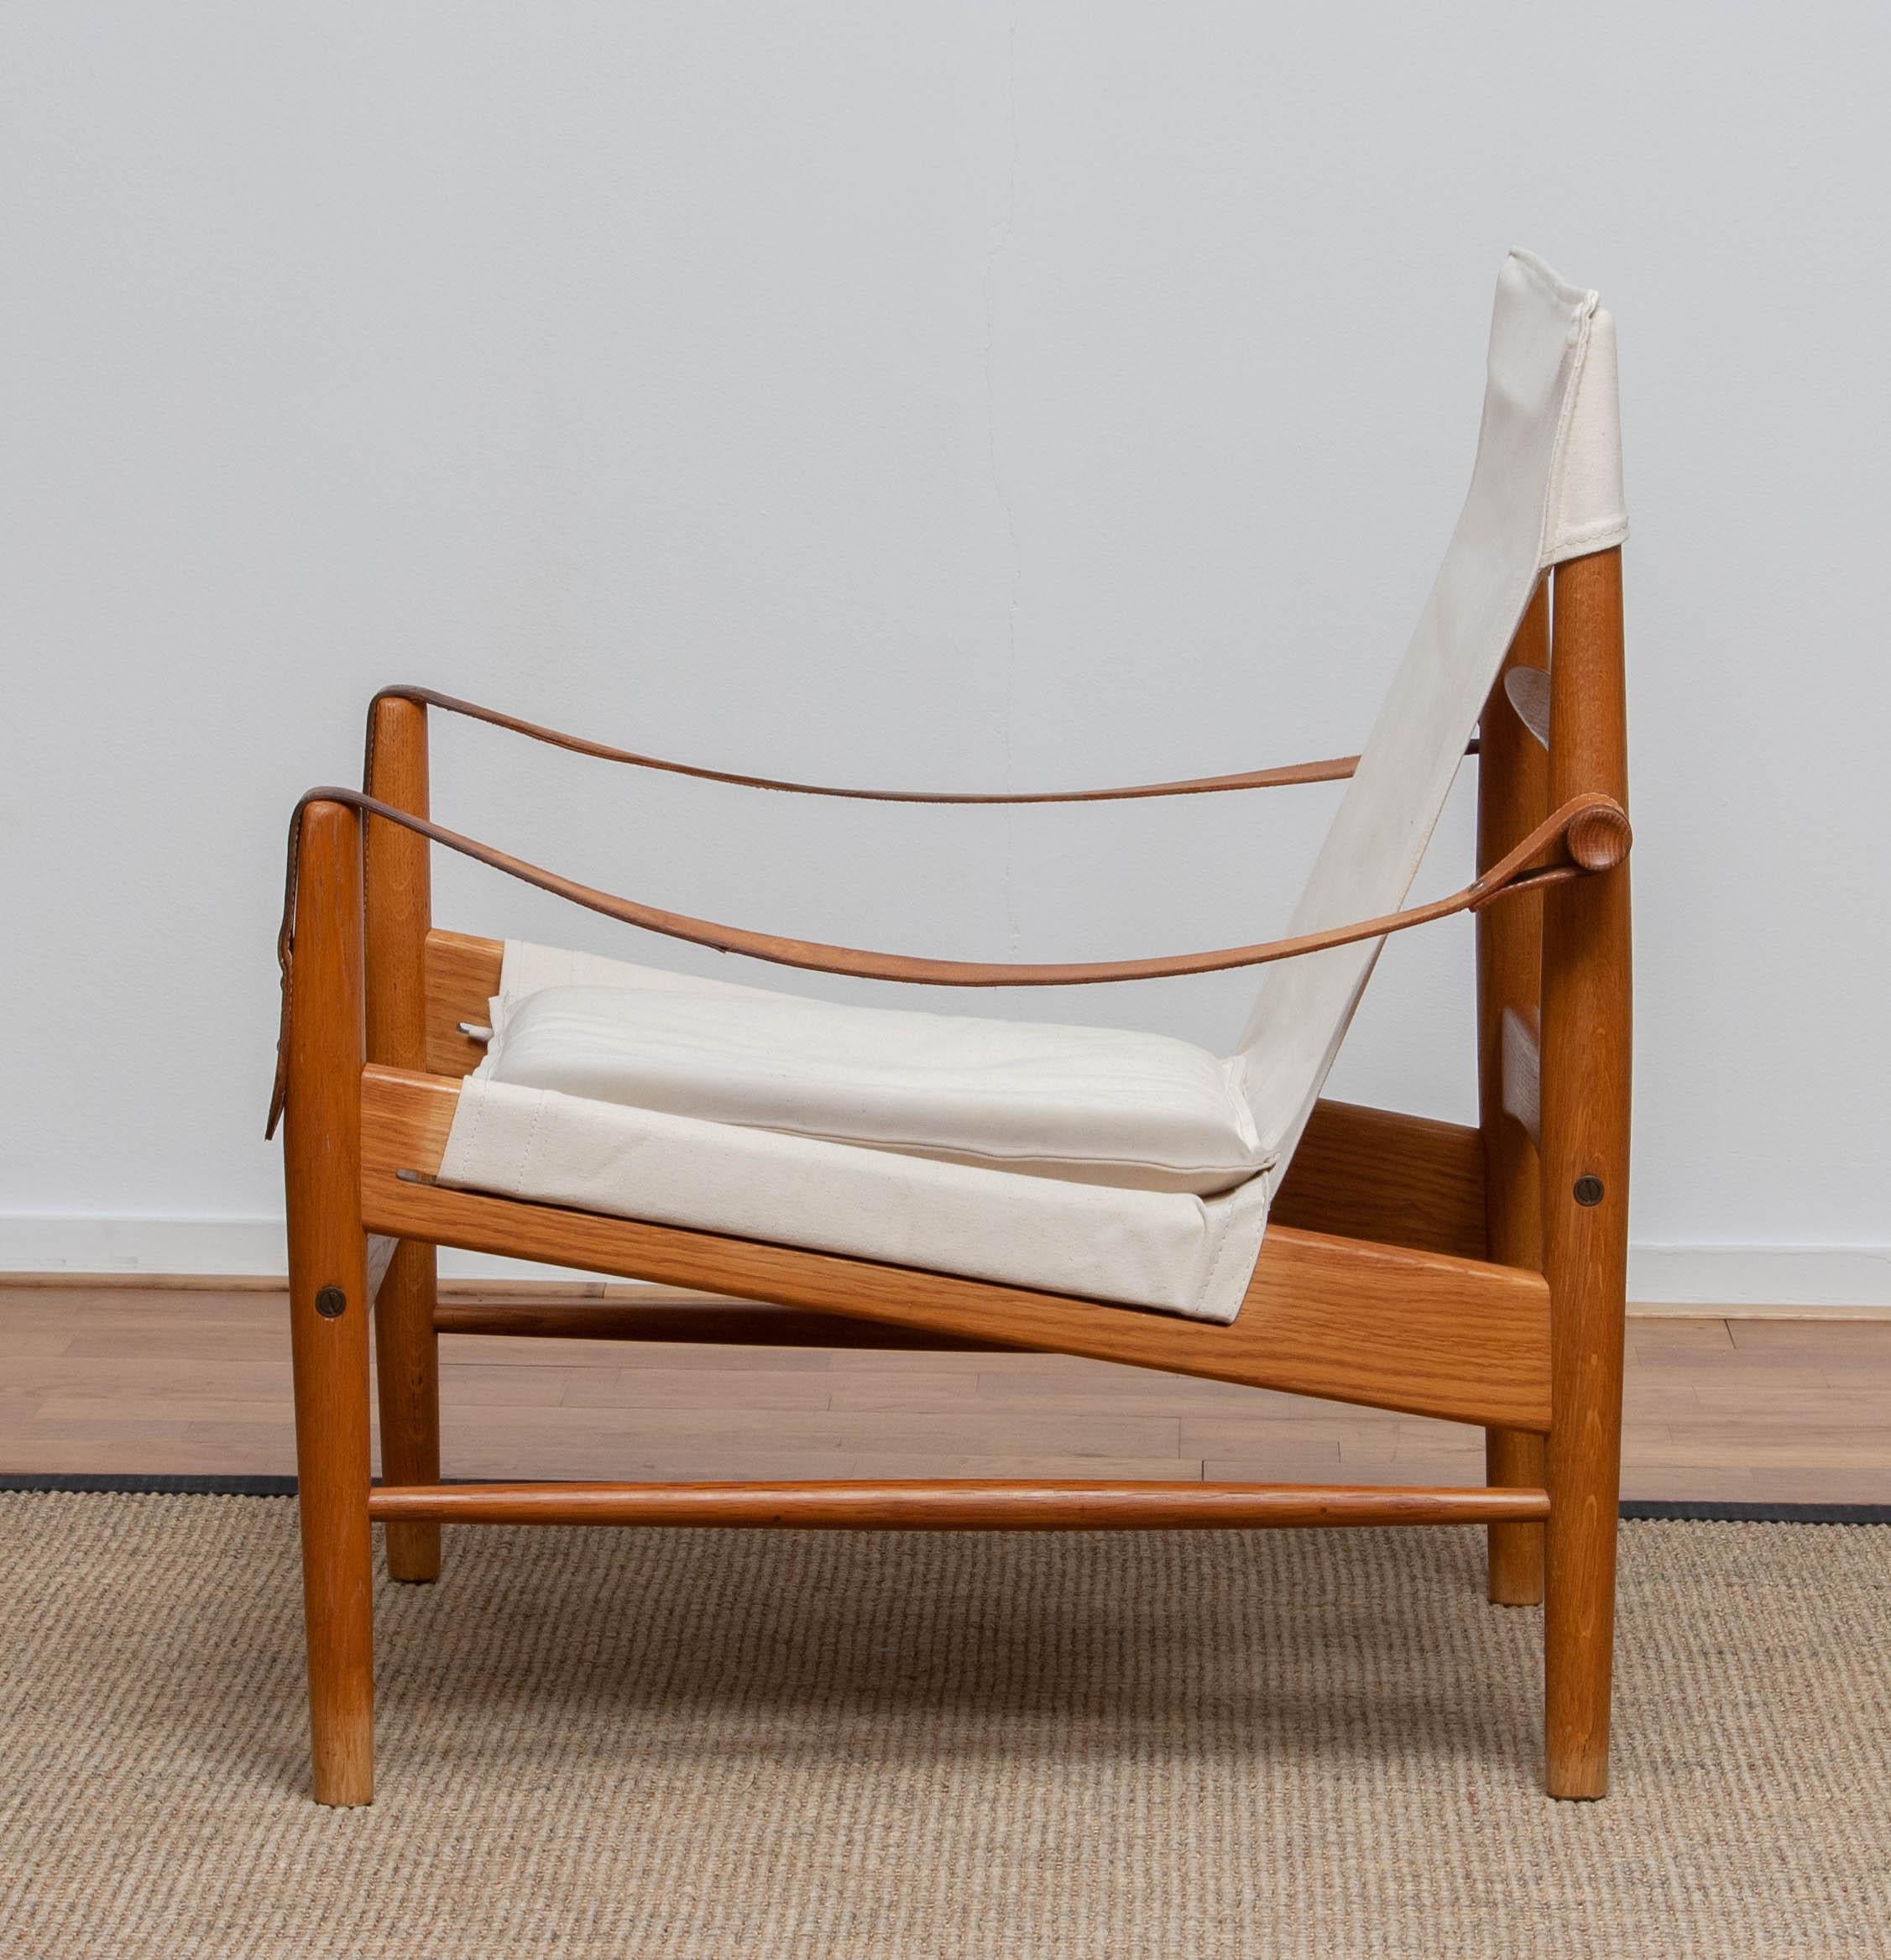 1960s, Safari Lounge Chair by Hans Olsen for Viska Möbler in Kinna, Sweden 1 1